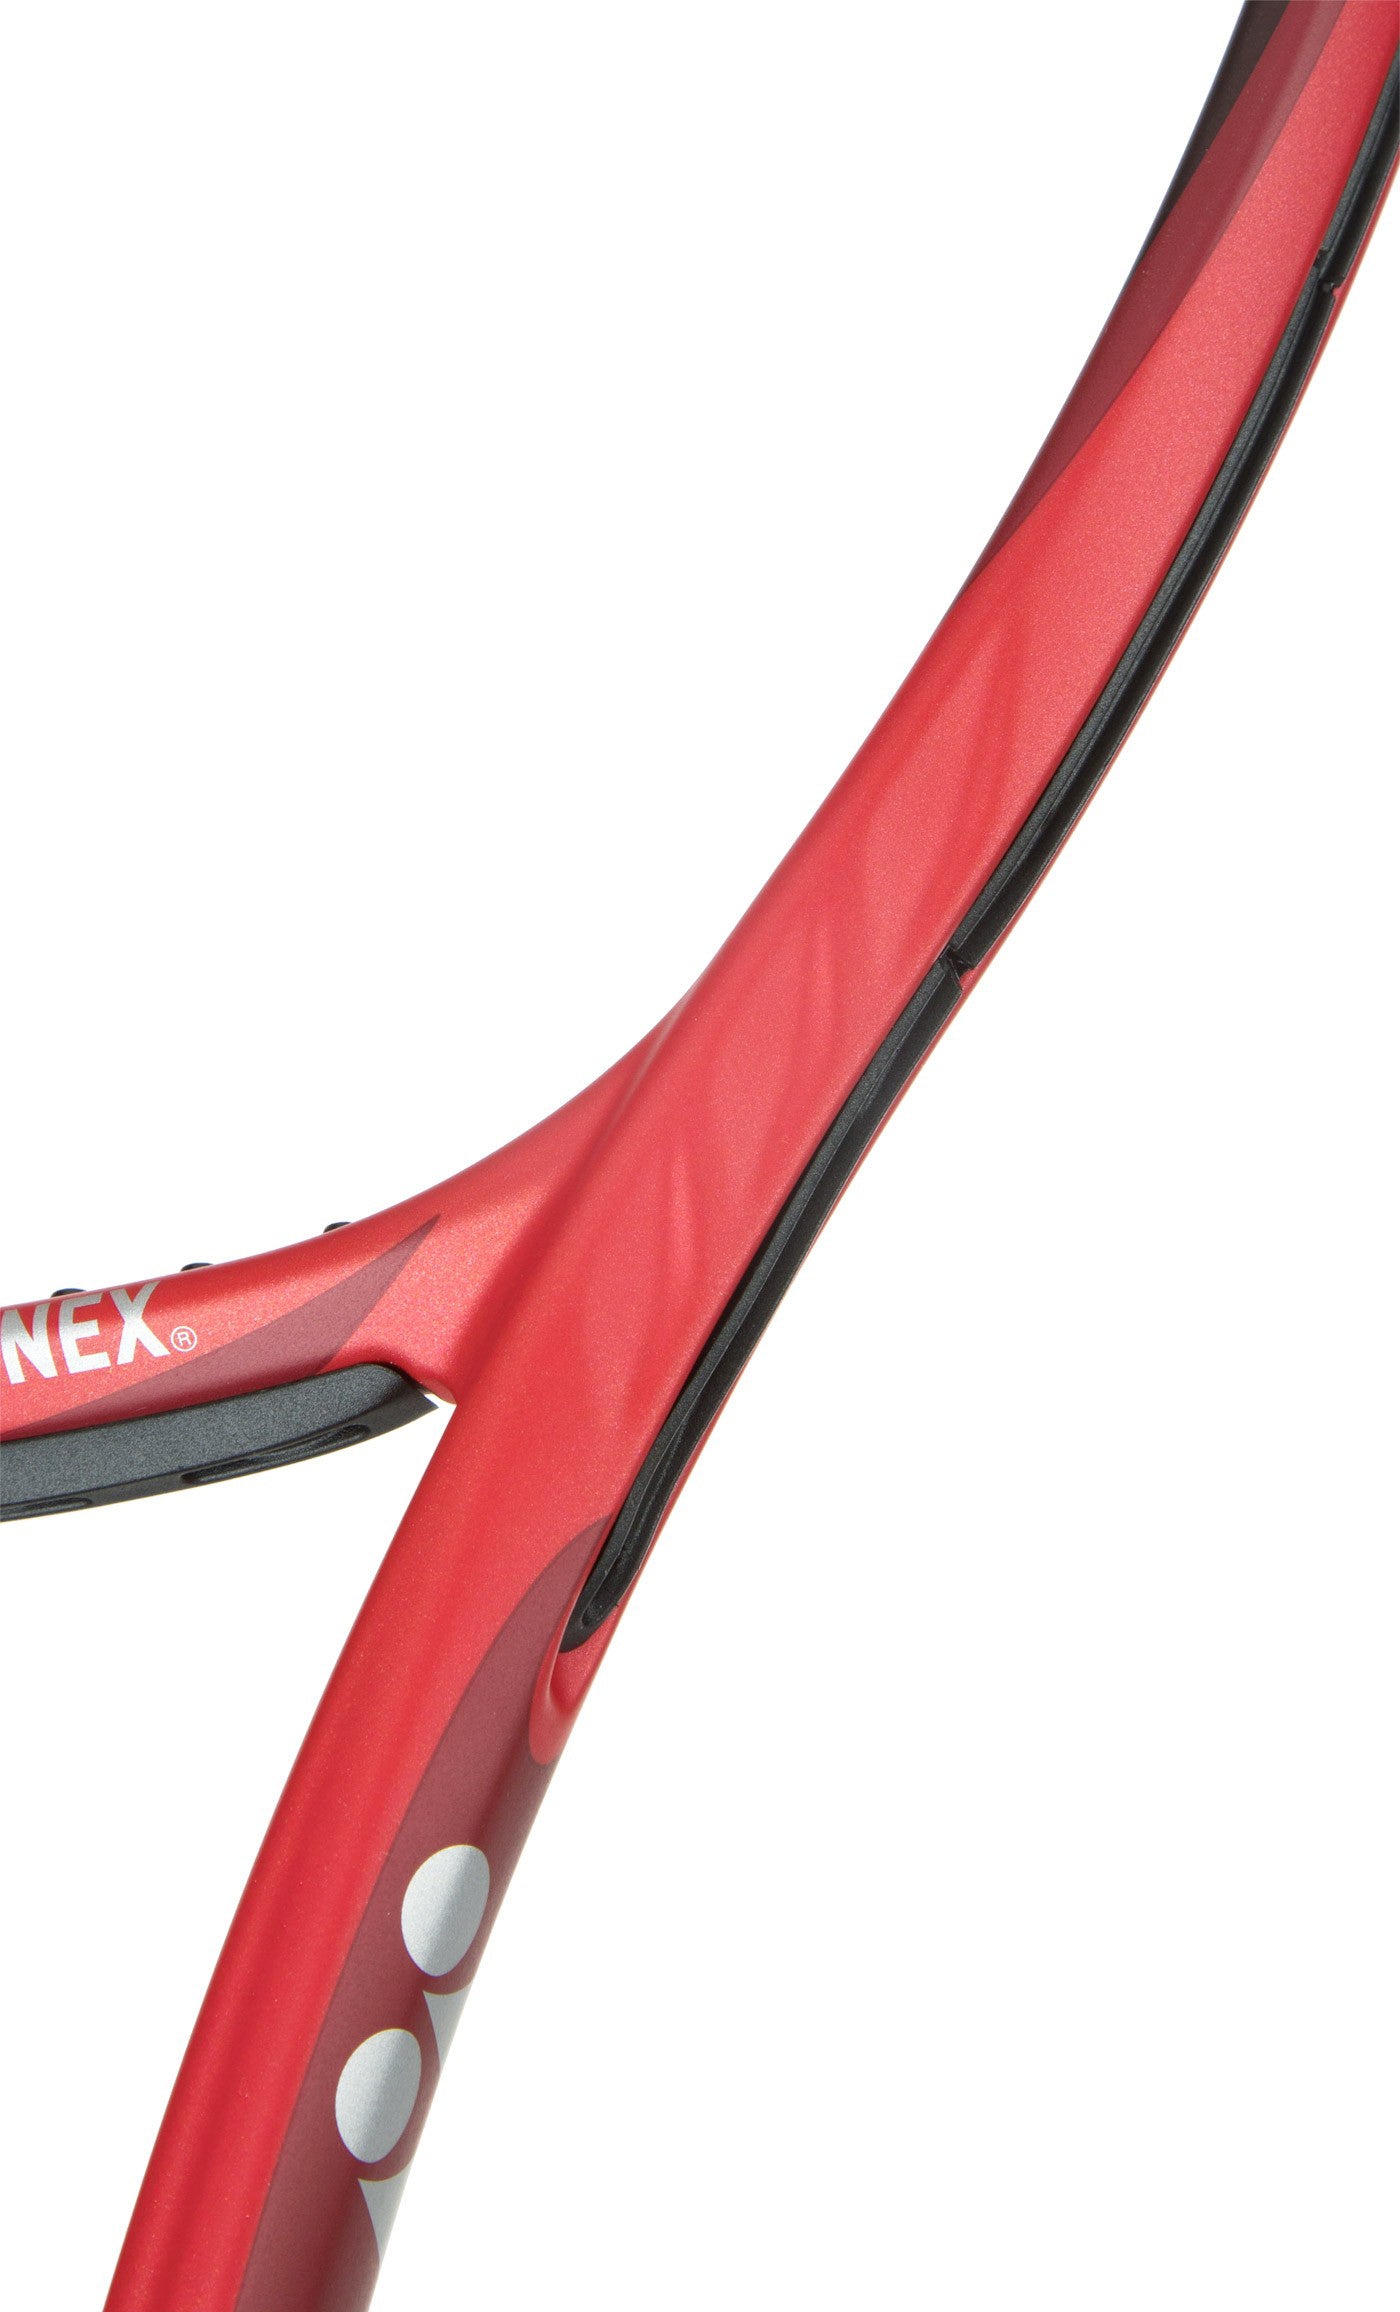 Raqueta Yonex Vcore 100 300g Flame red